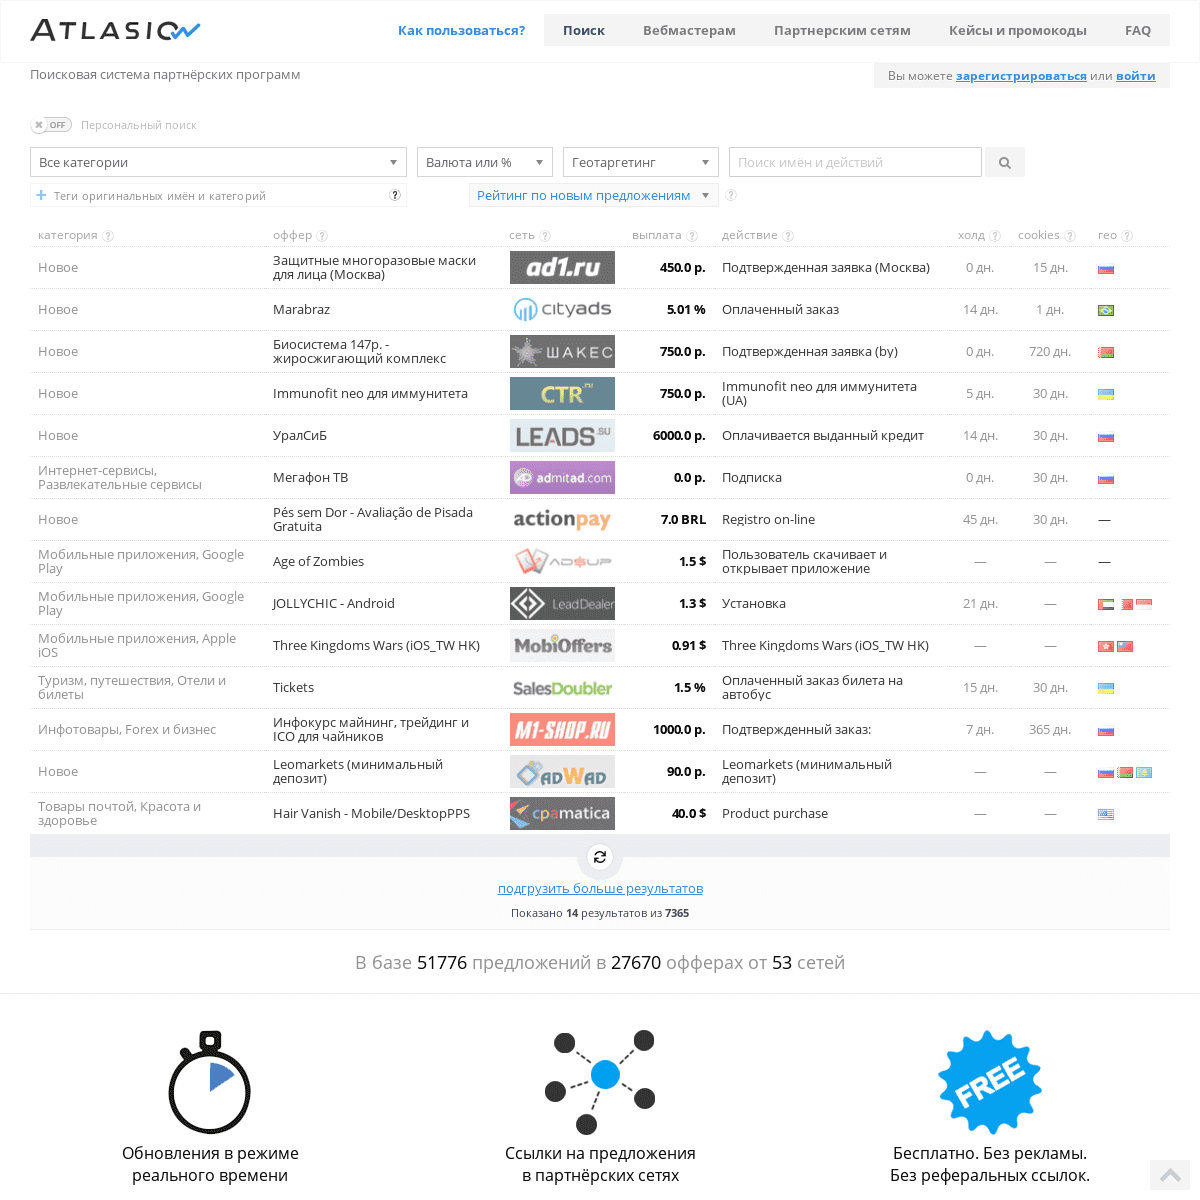 A complete backup of atlasio.com